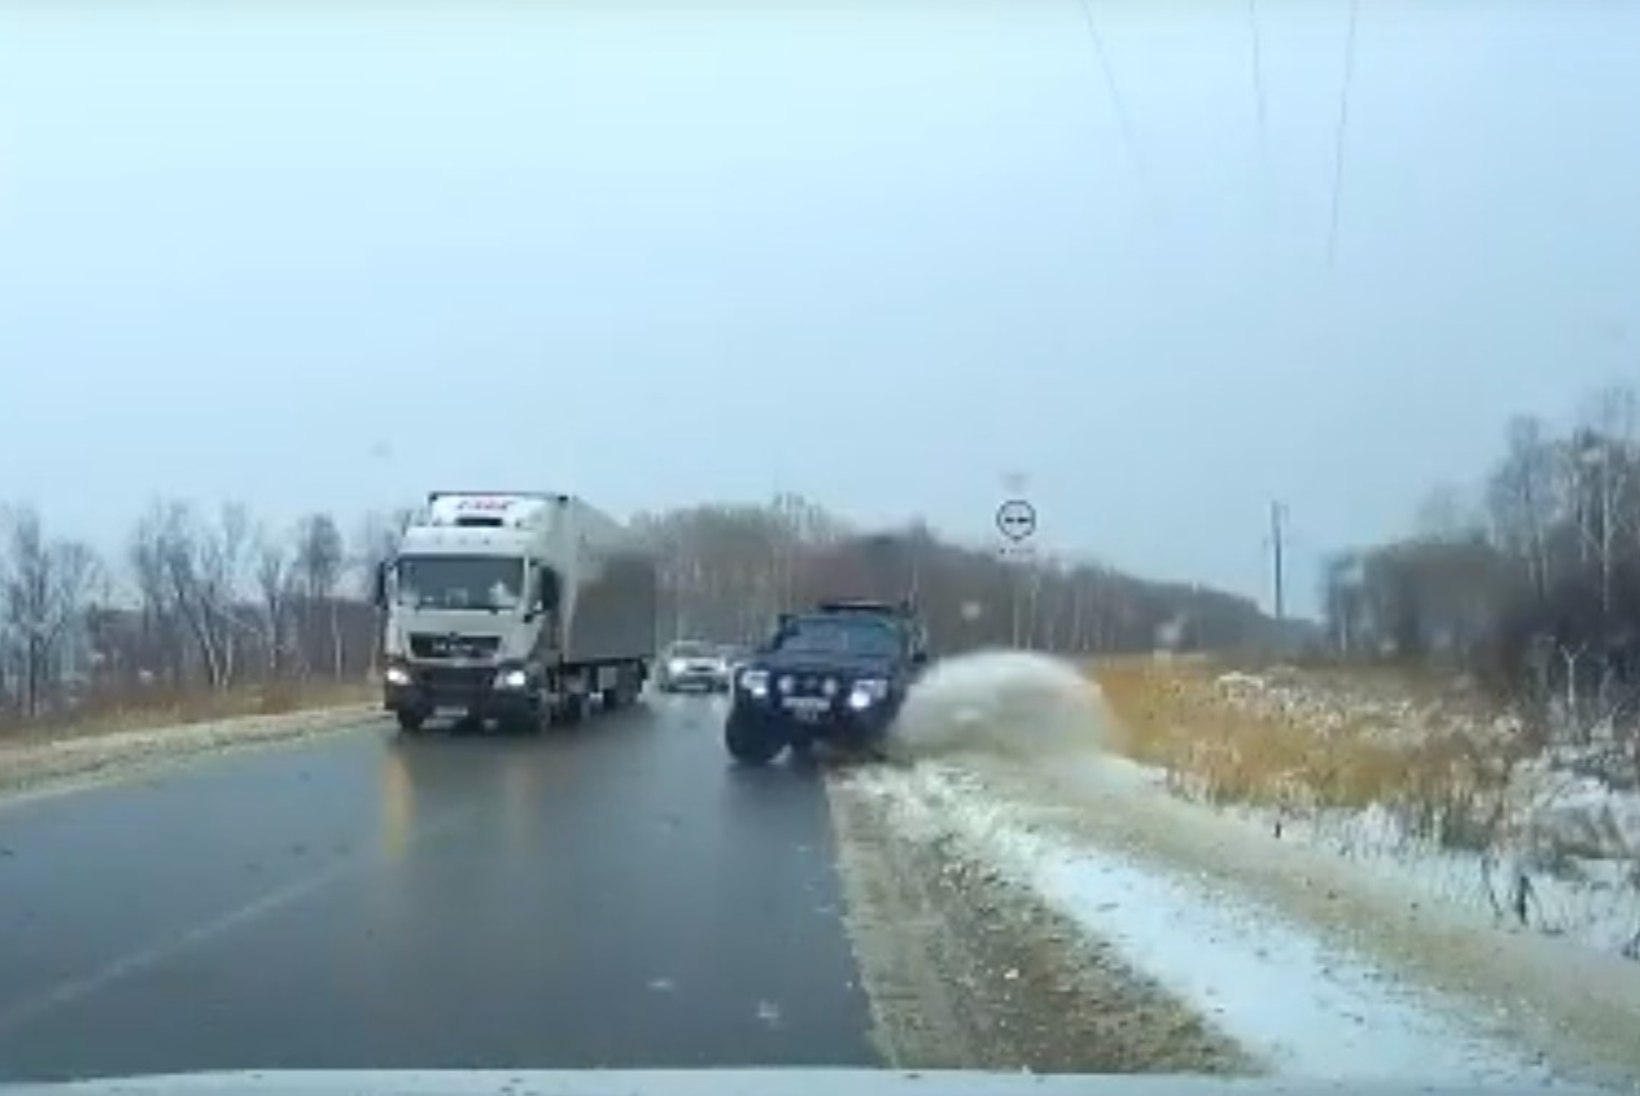 PARDAKAAMERA VIDEO | Kiilasjää põhjustas massiavarii Venemaa maanteel